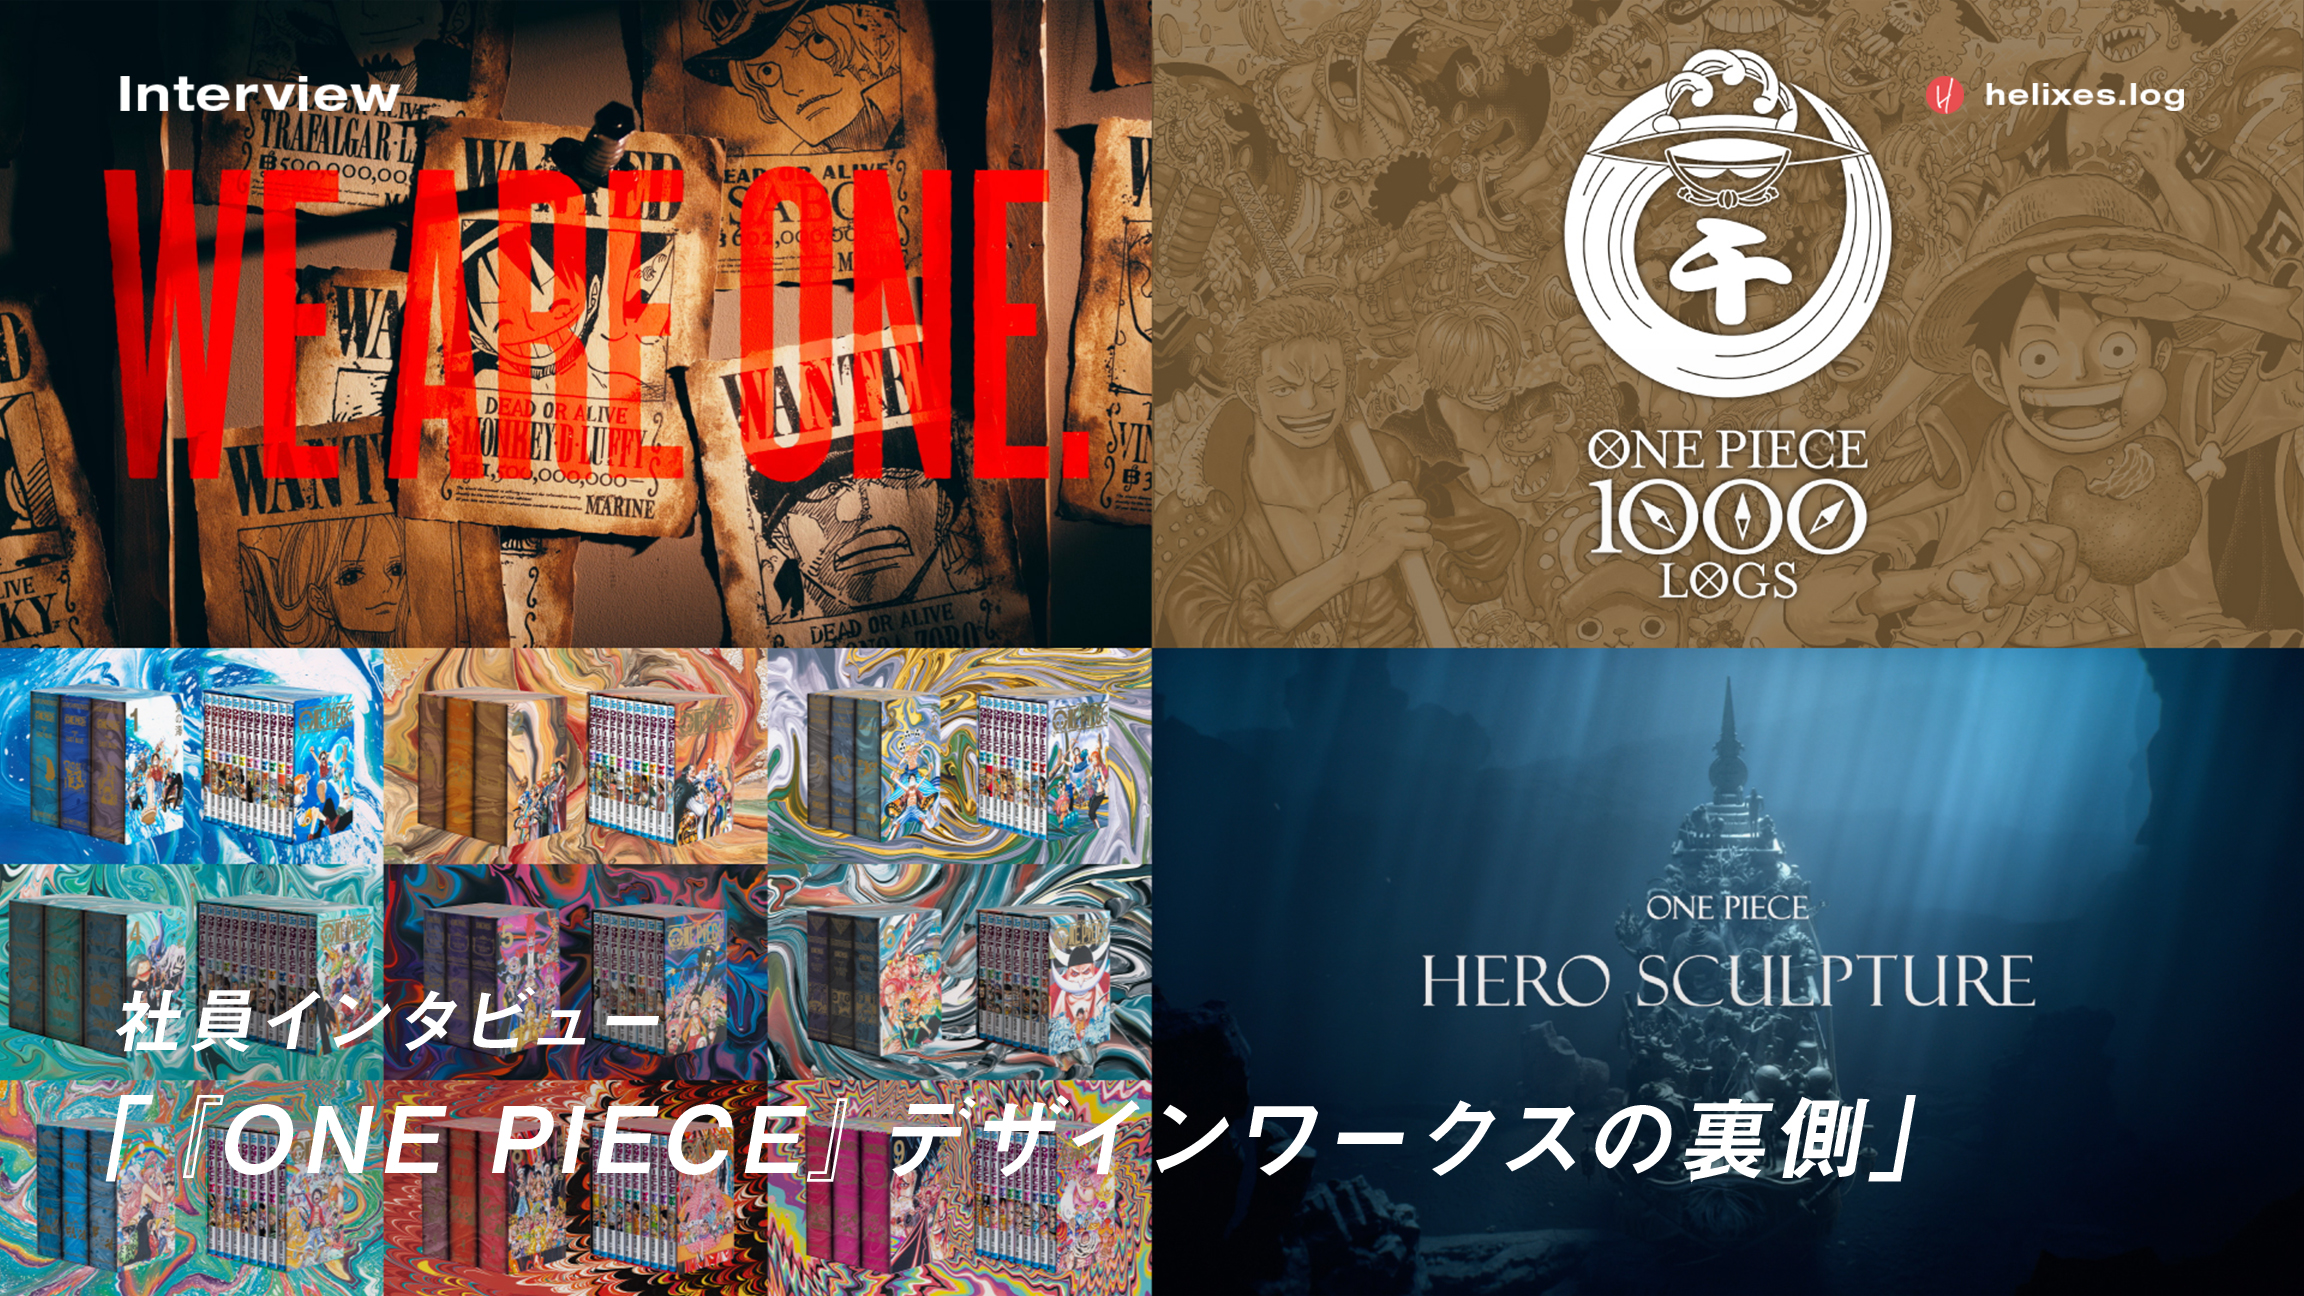 Helixes Log One Piece デザインワークスの裏側ーボックスデザインから千話記念ロゴに至る作品愛と解釈